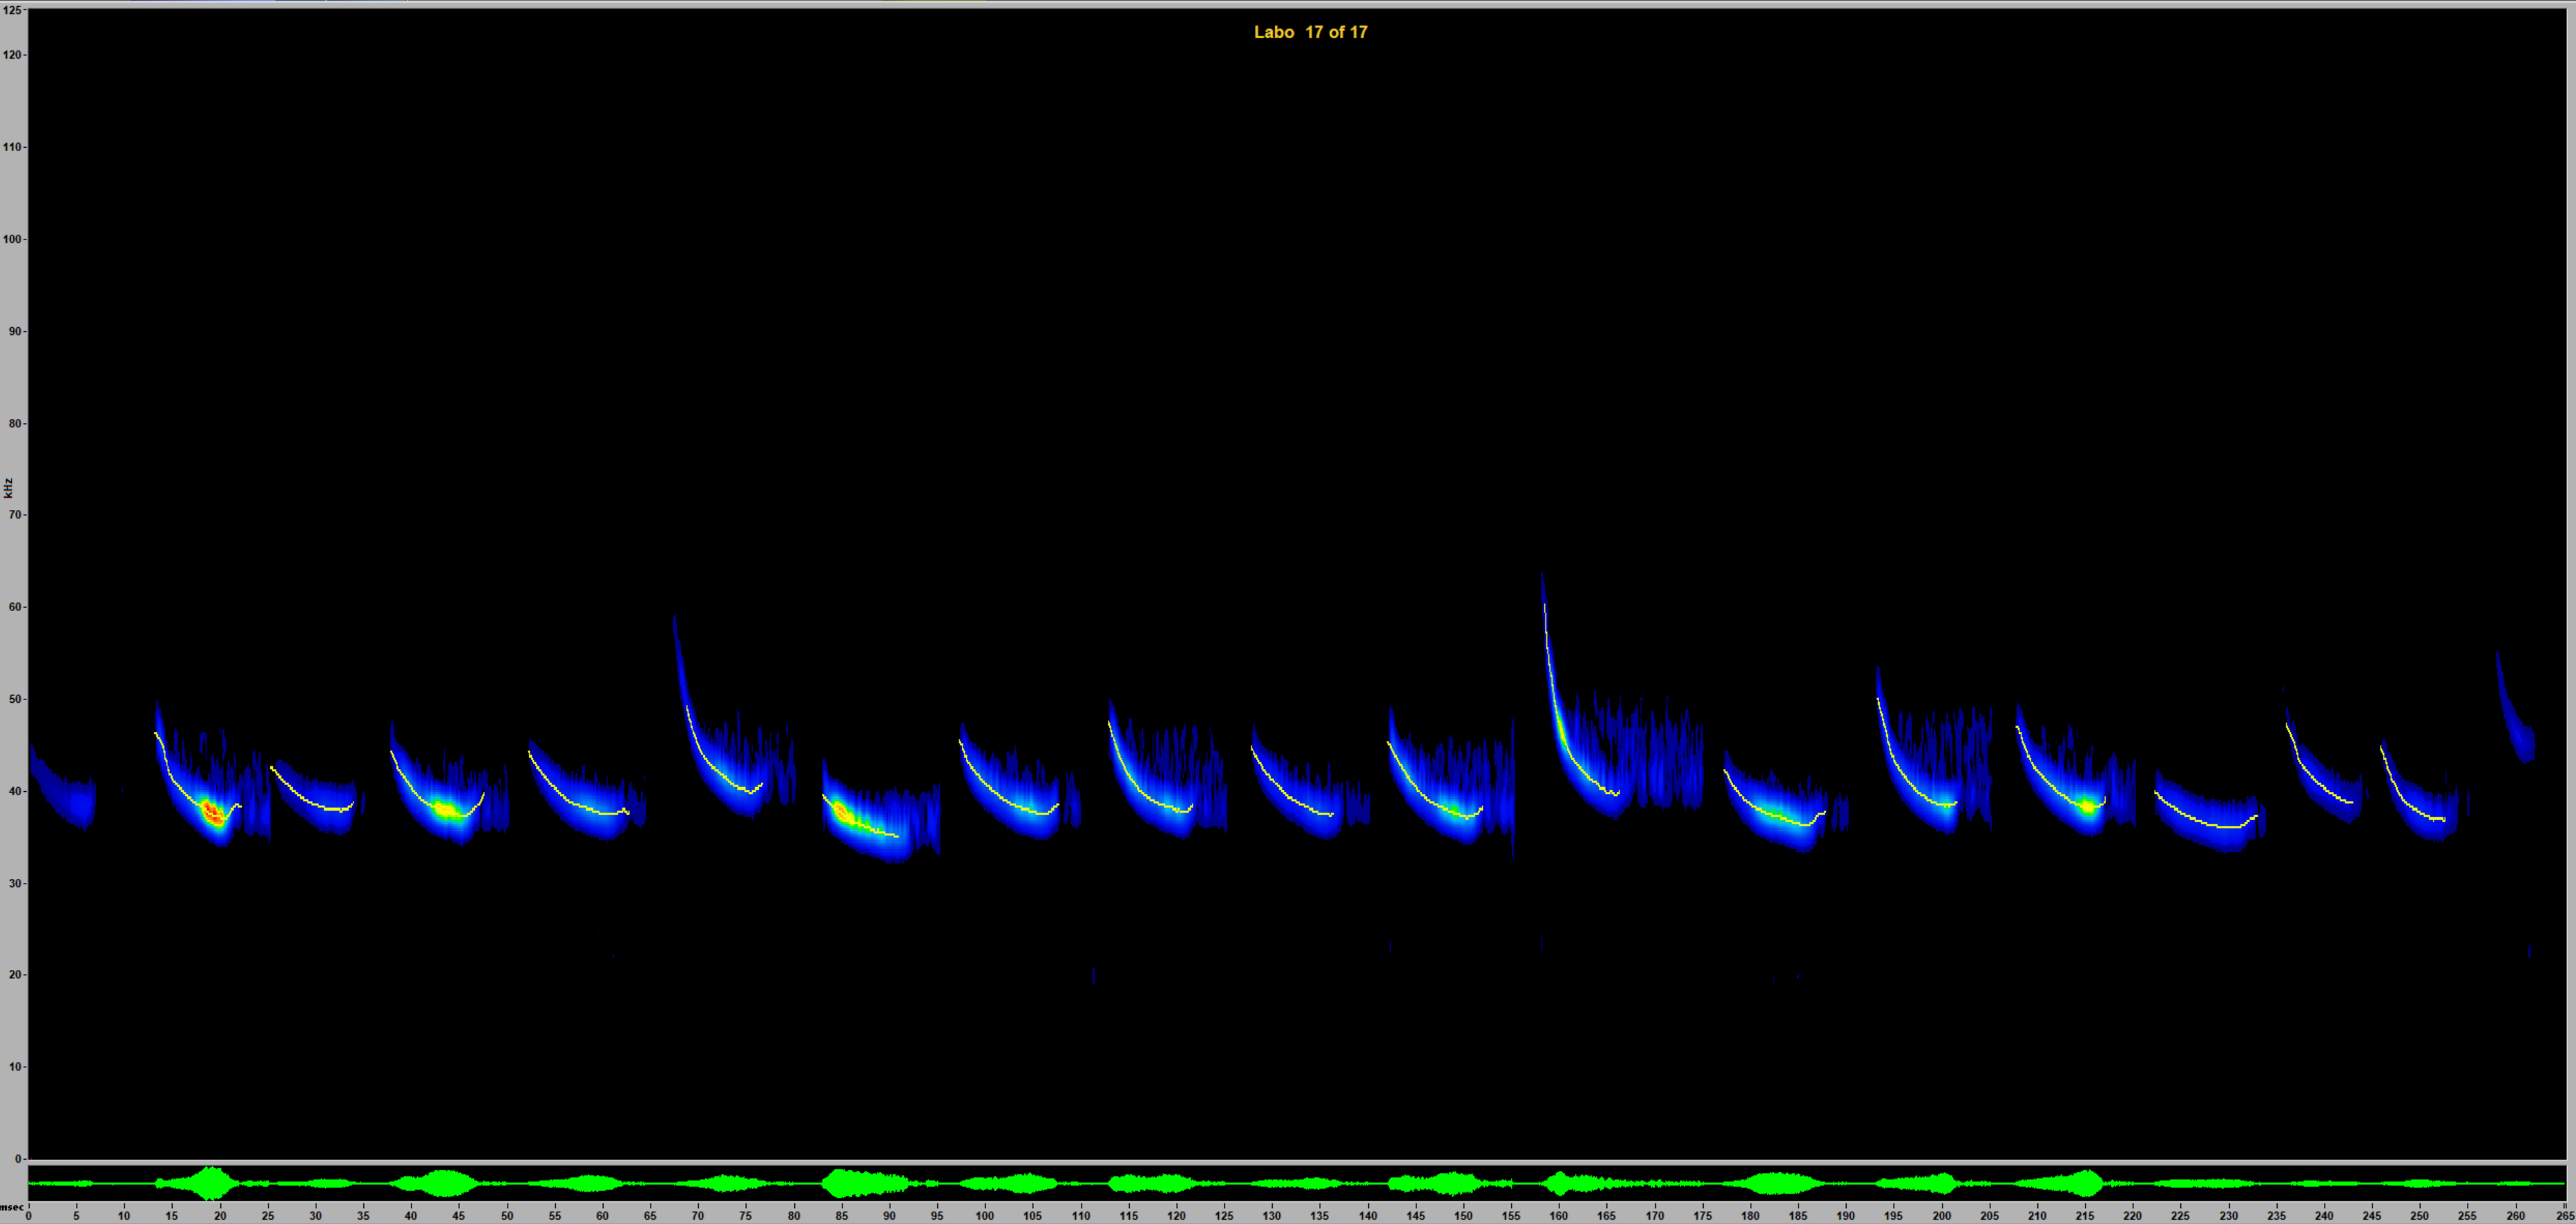 A sonogram image showing a visualization of bat sounds.